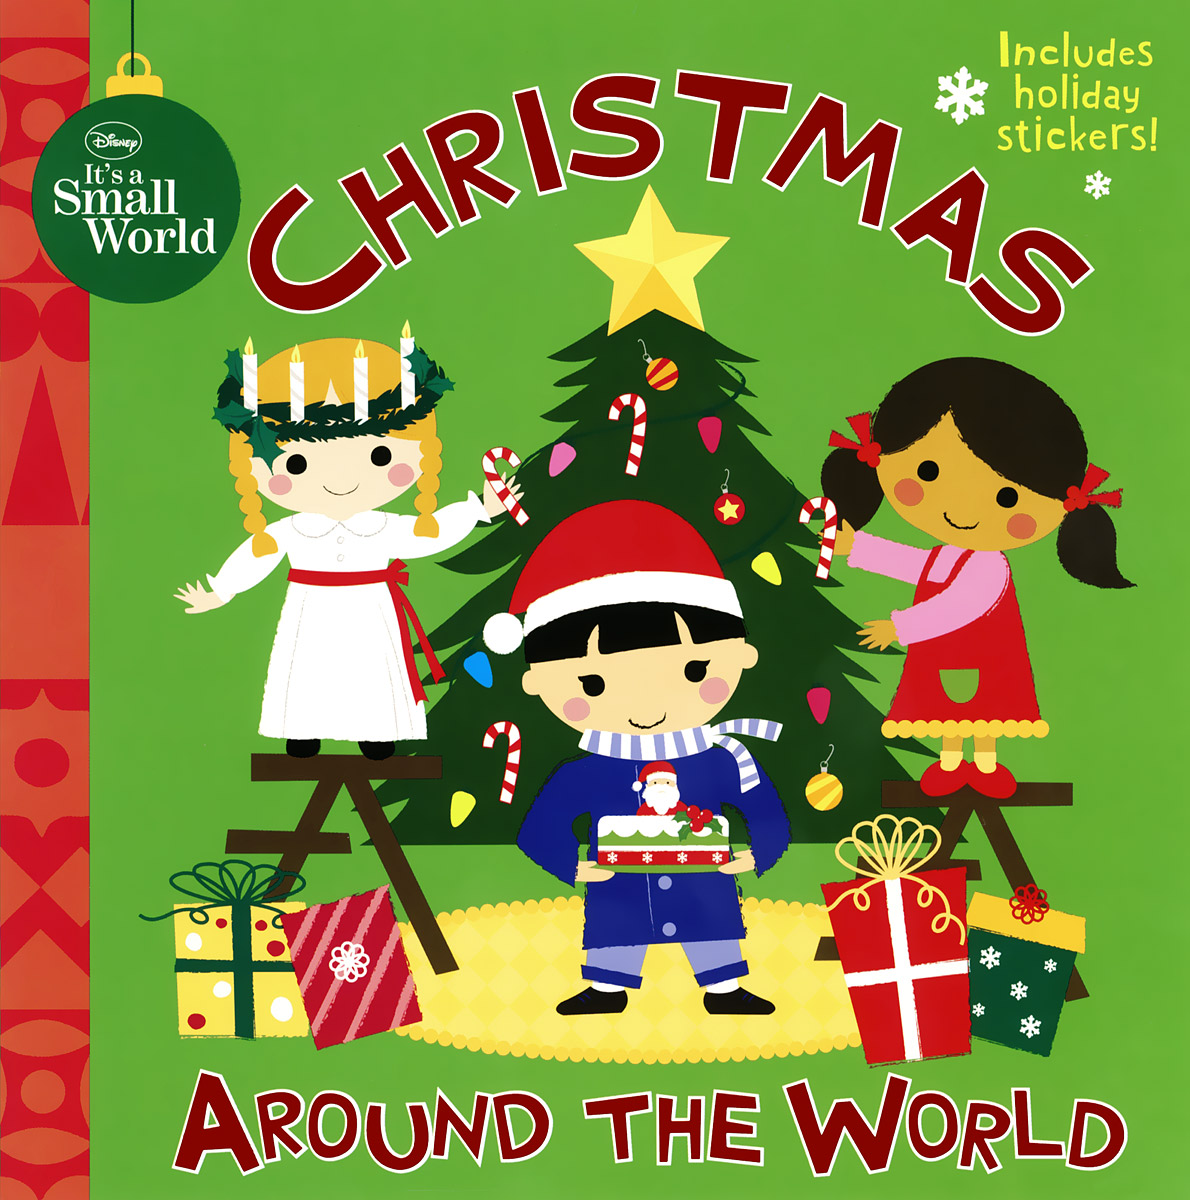 Disney It's A Small World: Christmas Around the World